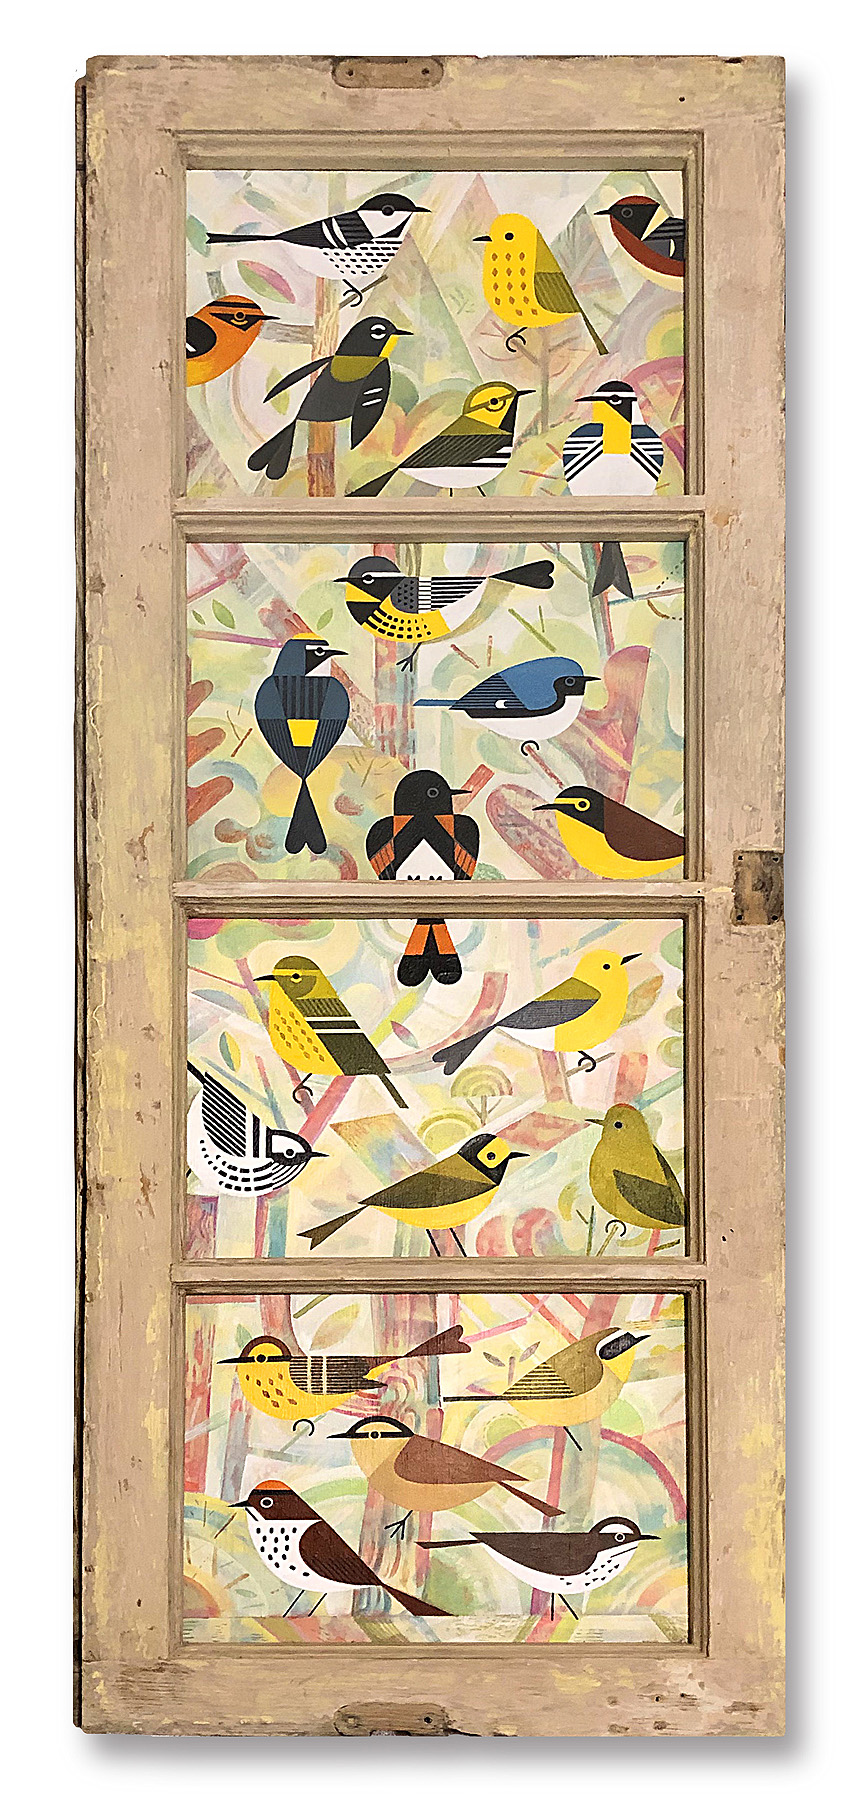 scott partridge - acrylic painting - warblers window 2019